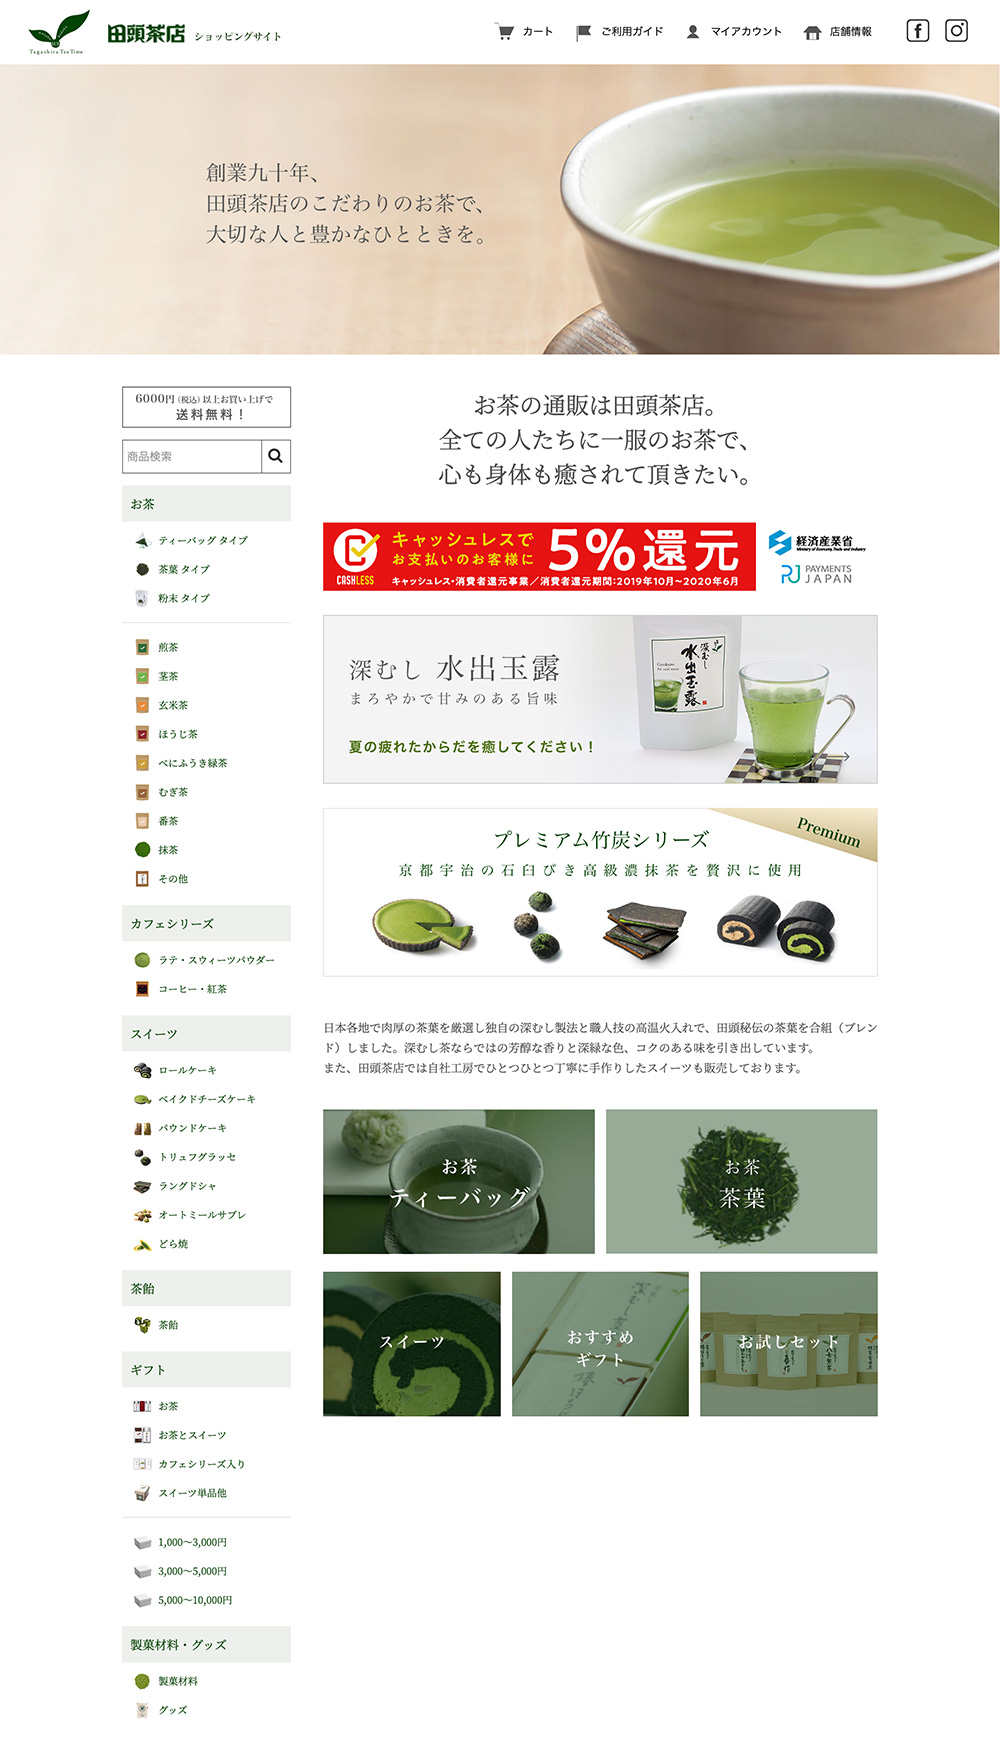 Tagashira Tea online shop